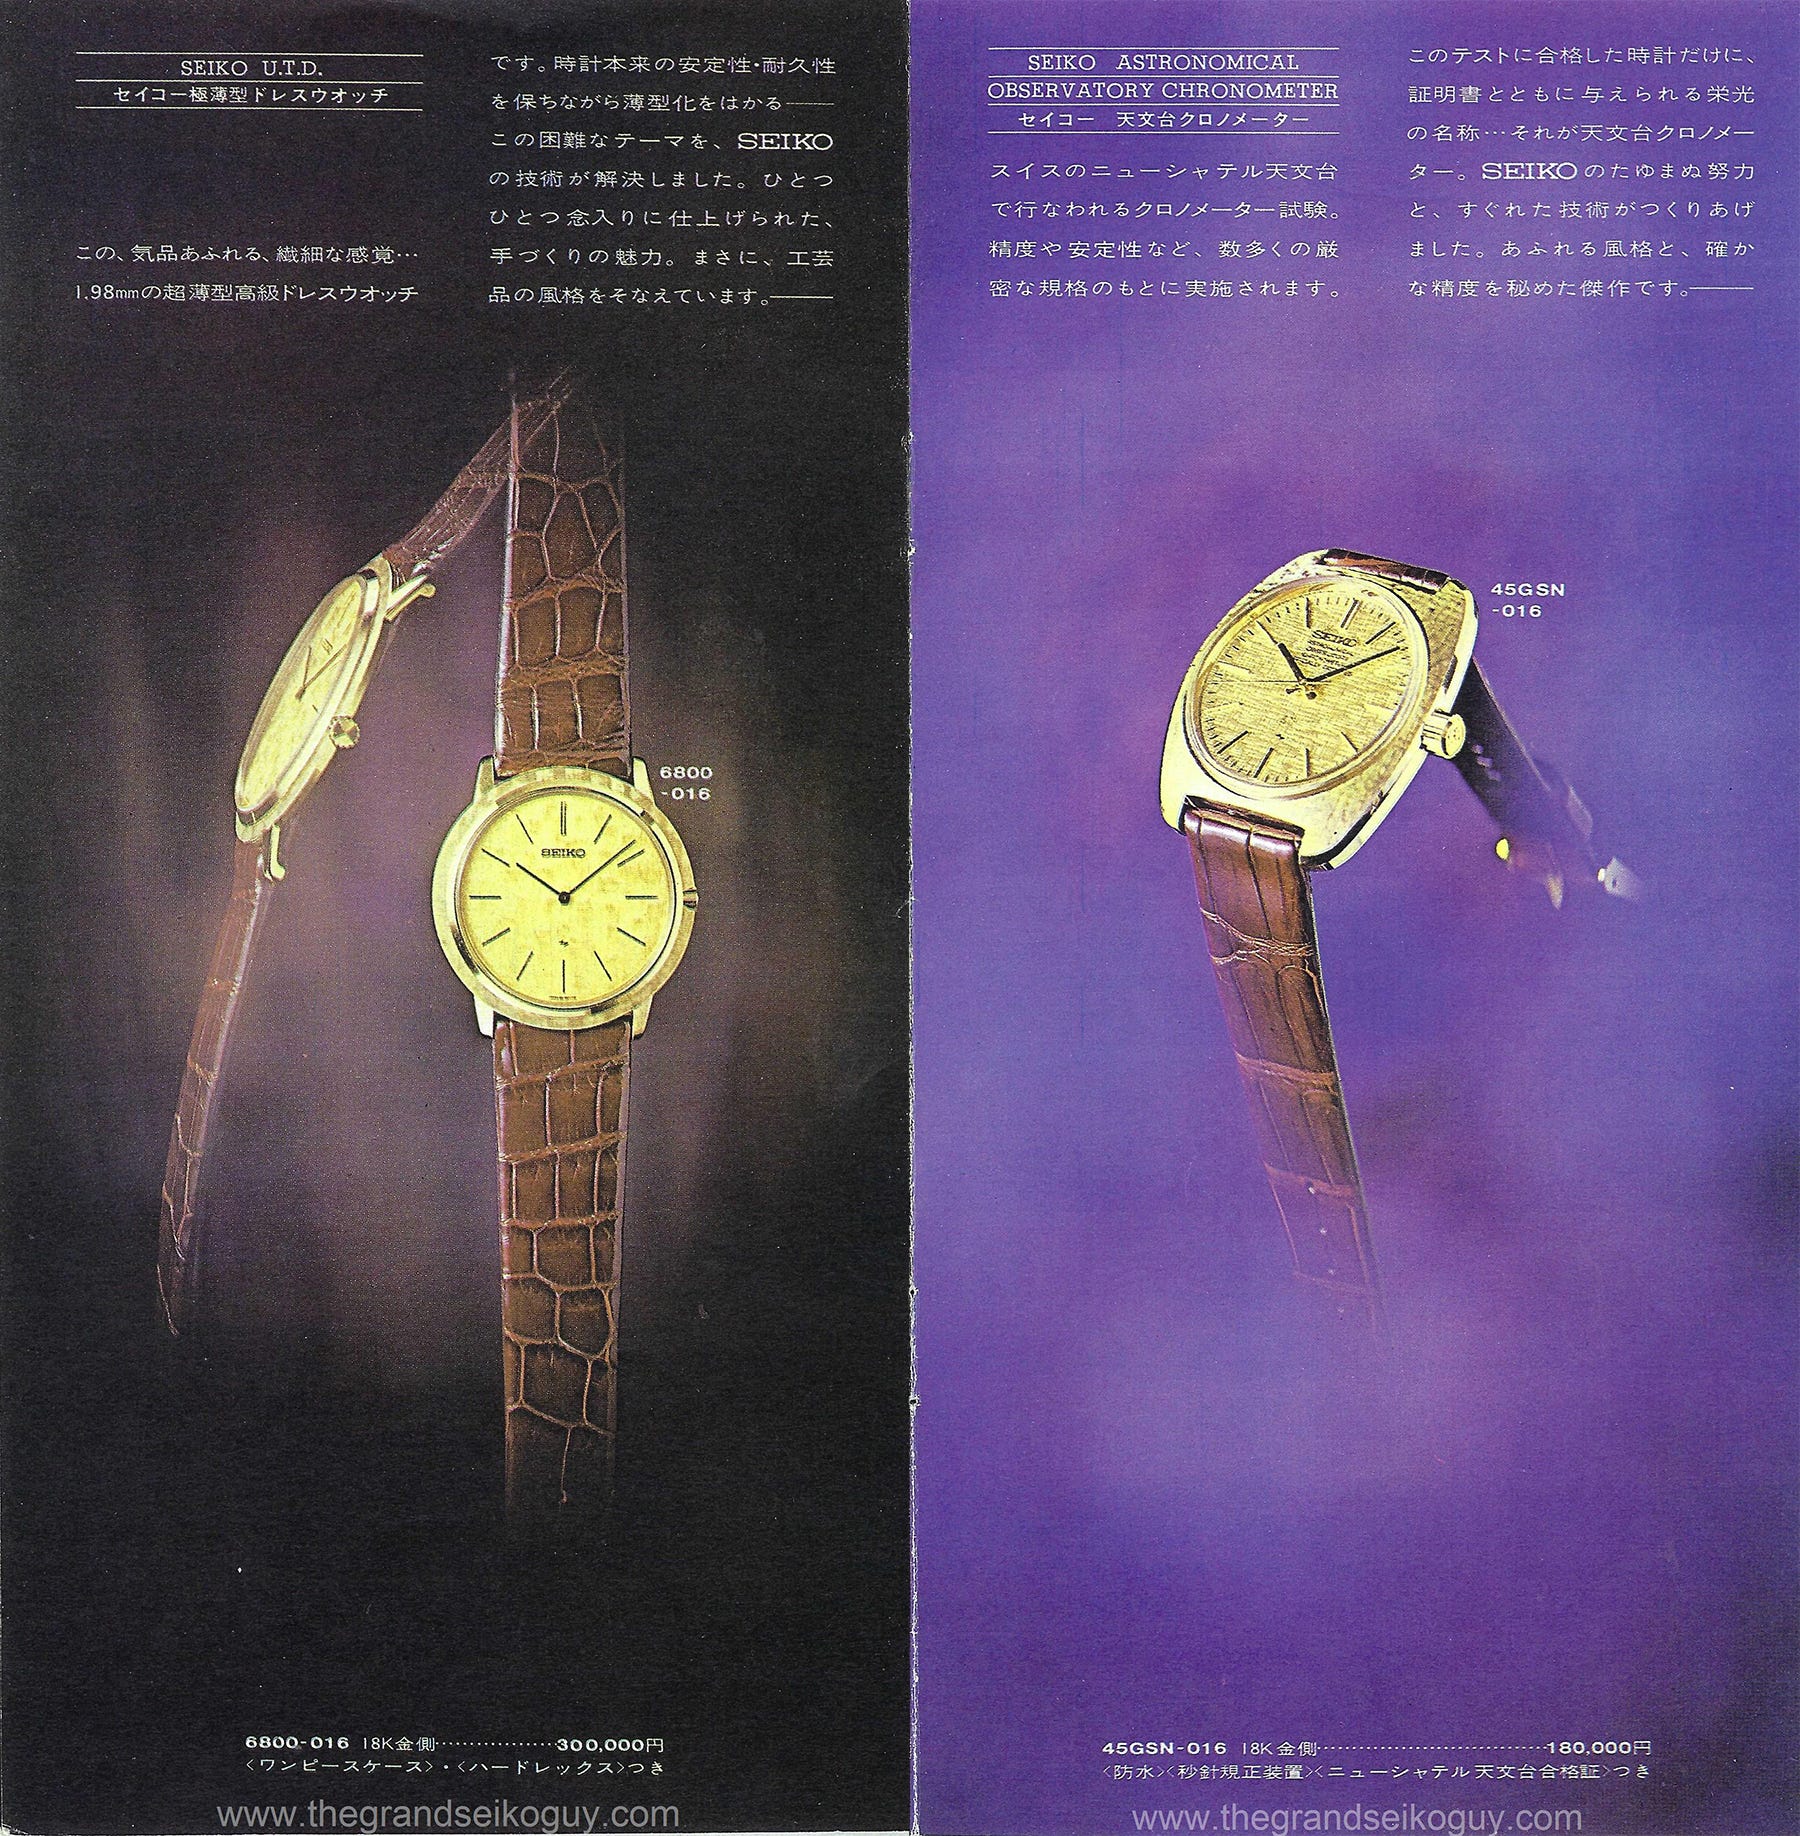 The Seiko 1969 Special Luxury Catalogue